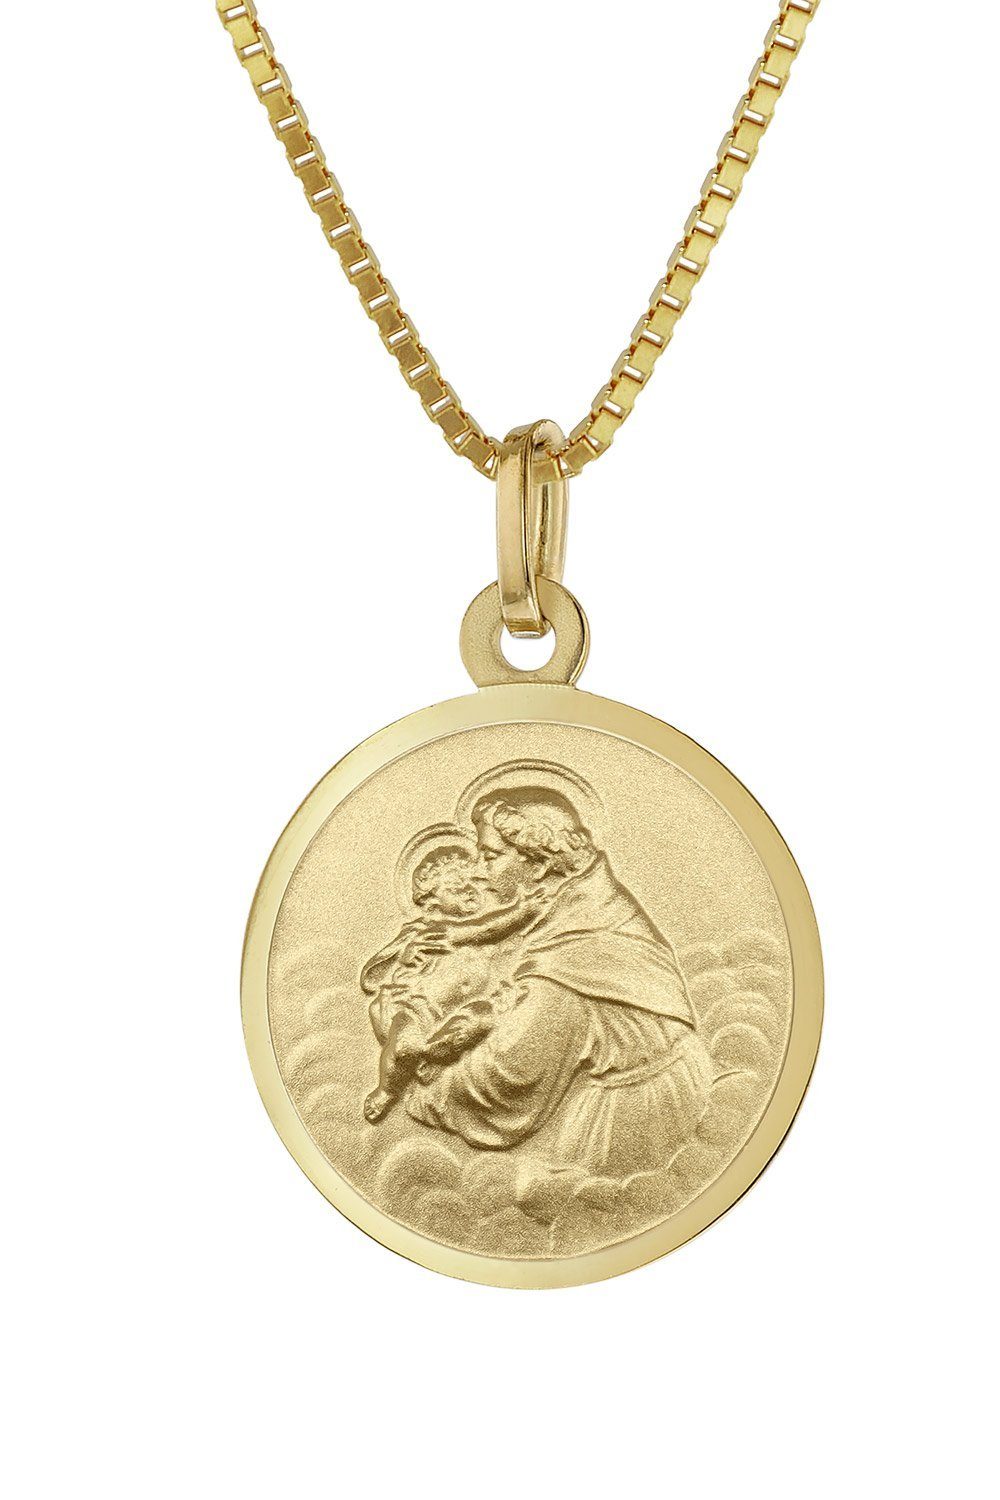 trendor Kette mit Anhänger Antonius Medaille Ø 16 mm Gold 333 an goldplattierter Kette